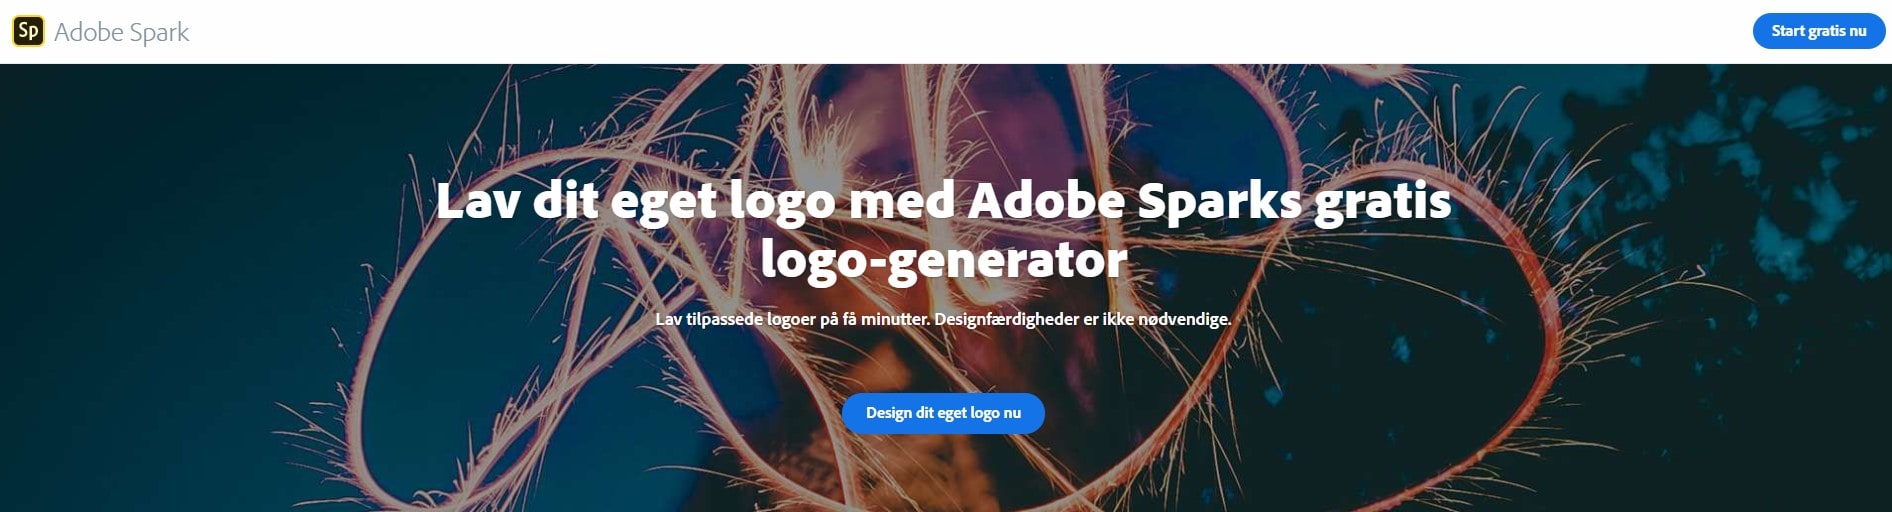 Adobe Spark_overview_da